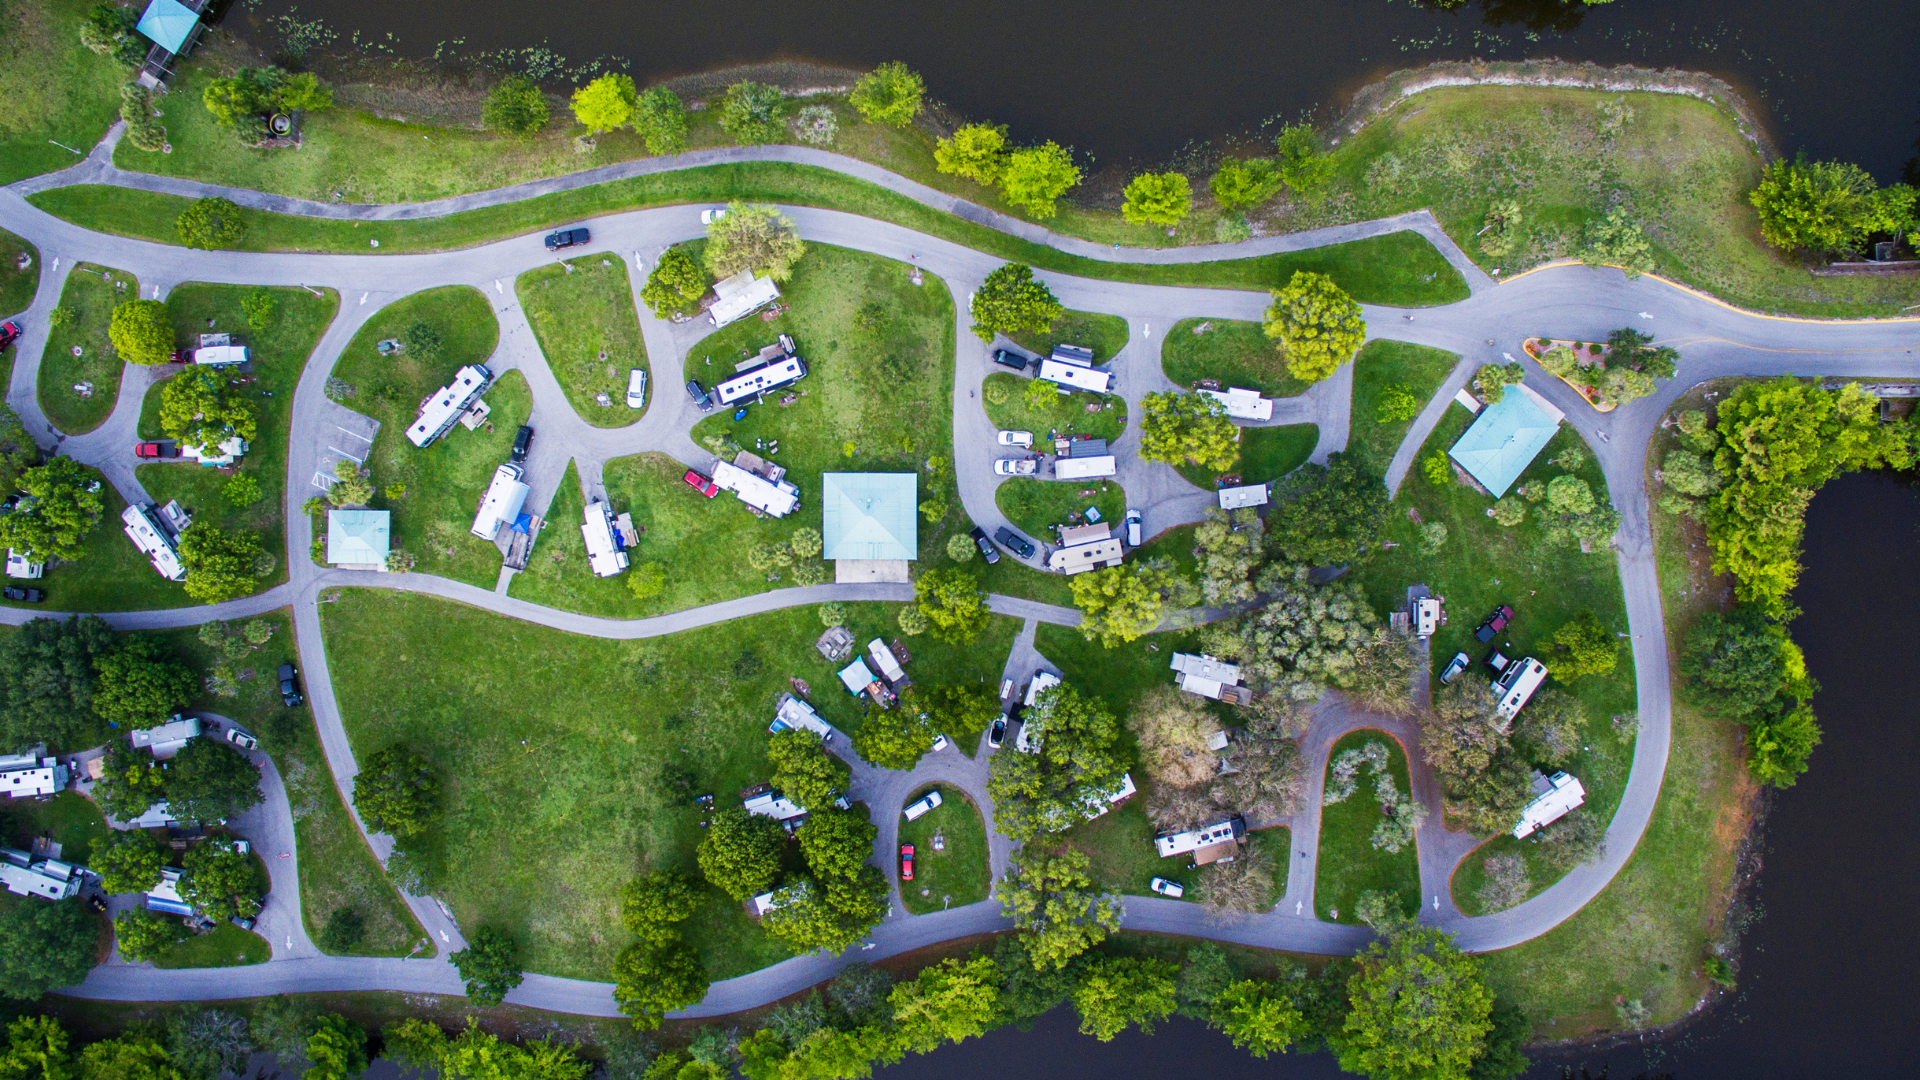 Aerial view of campgrounds near Savannah, GA.